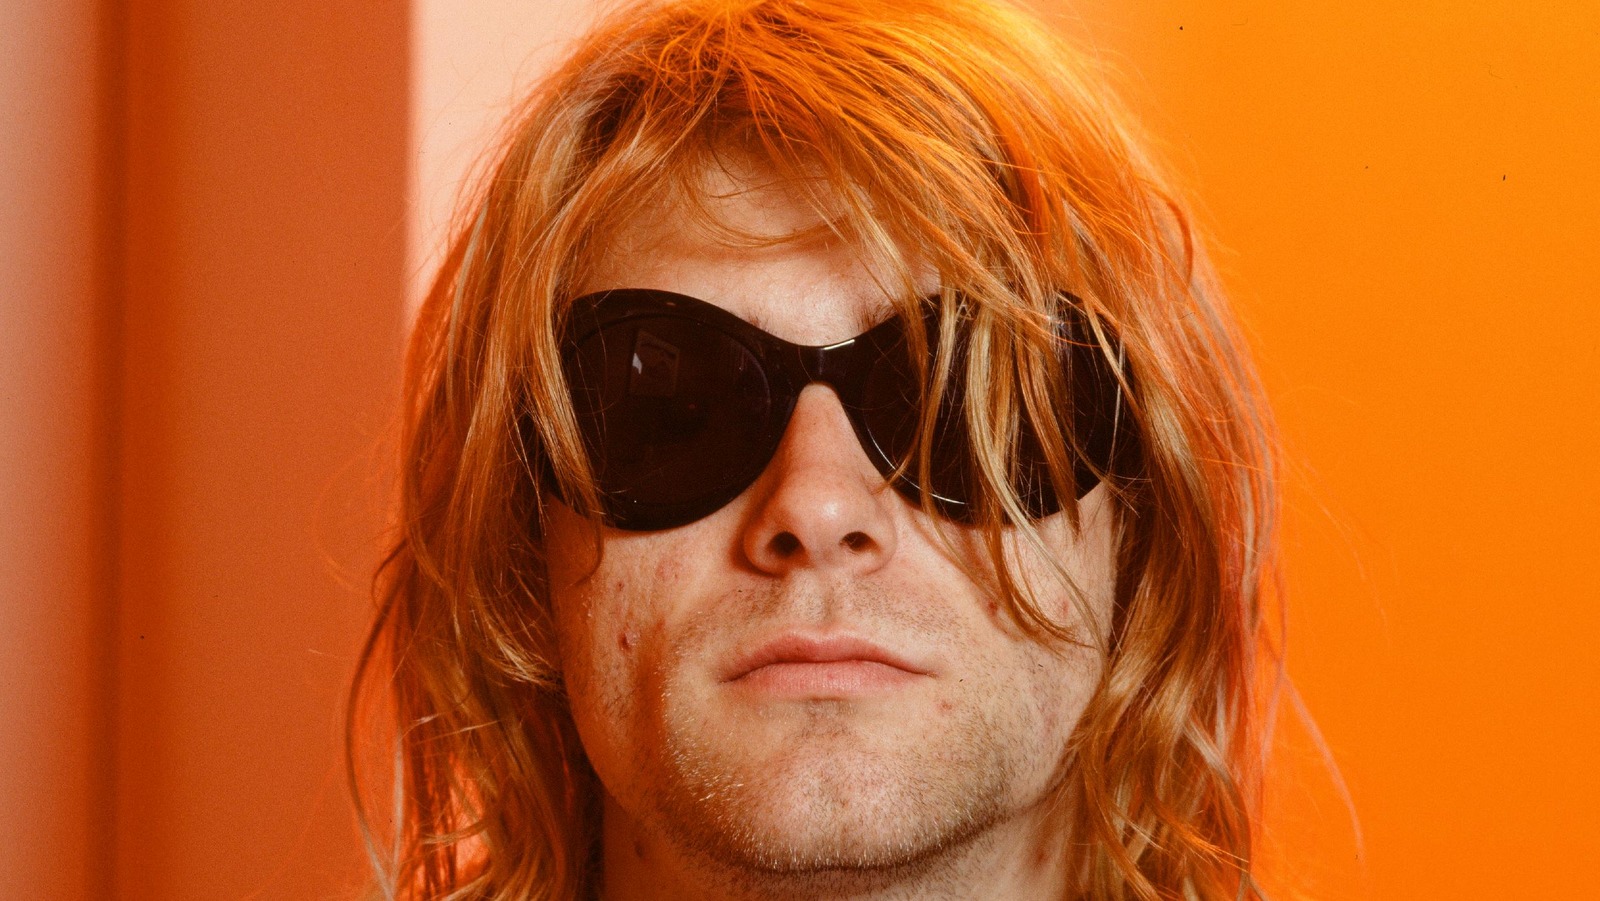 Kurt Cobain's blue hair in the "Smells Like Teen Spirit" music video - wide 2